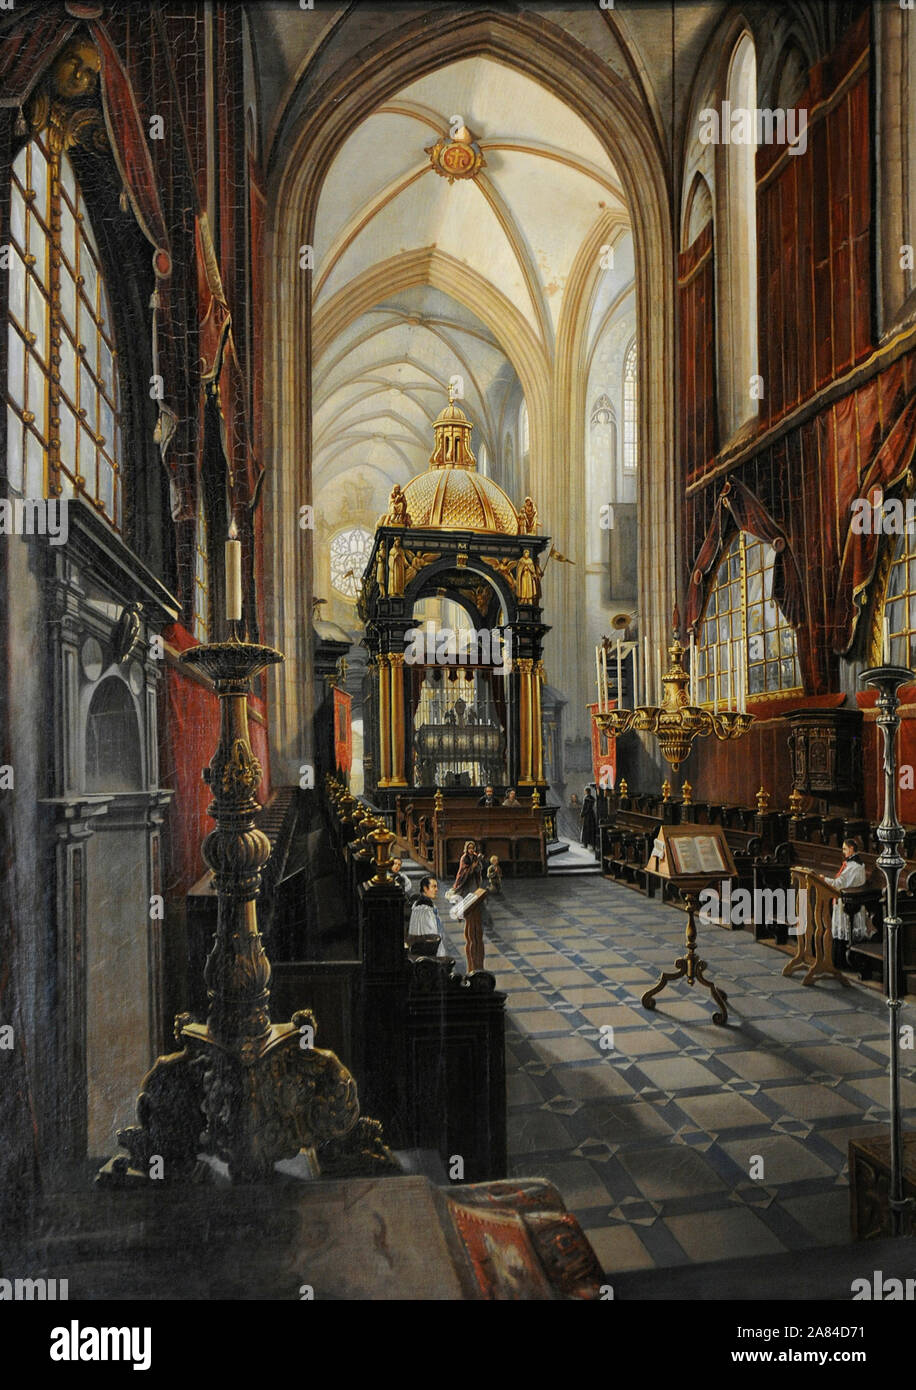 Saturnin Swierzynski (1820-1885). Polish painter. Interior of the Wawel Royal Cathedral, 1875. 19th Century Polish Art Gallery (Sukiennice Museum). National Museum of Krakow. Poland. Stock Photo